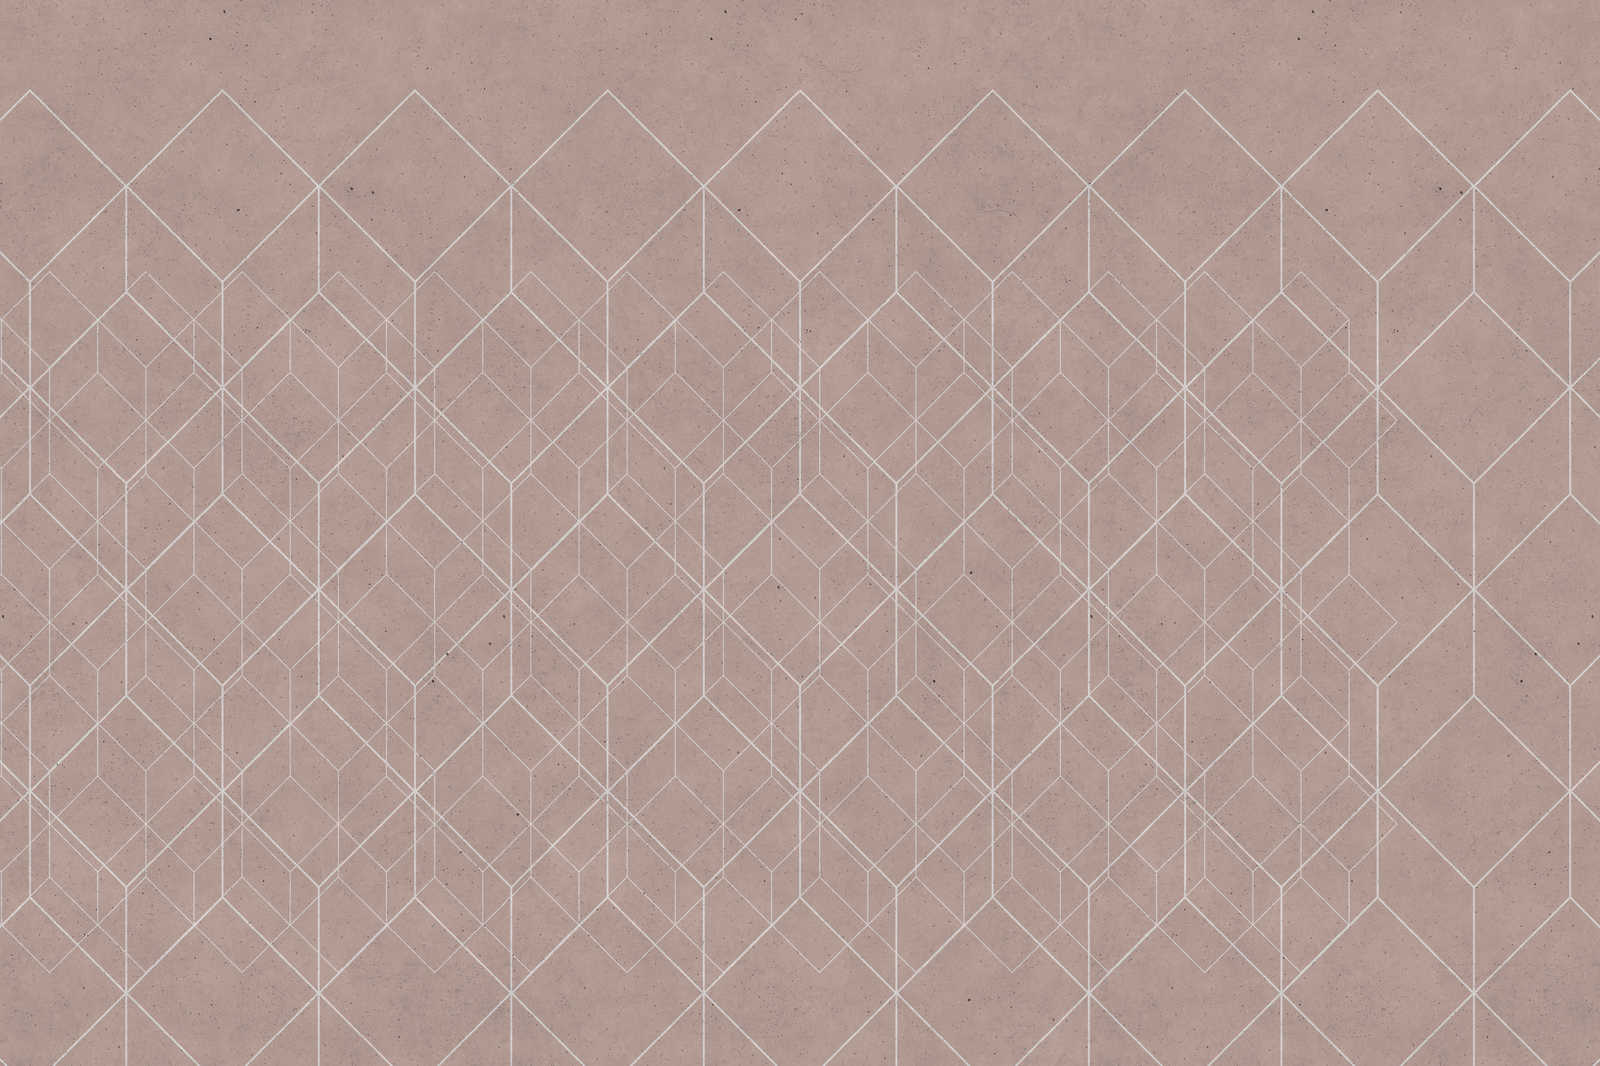             Canvas painting geometric pattern | beige, white - 0,90 m x 0,60 m
        